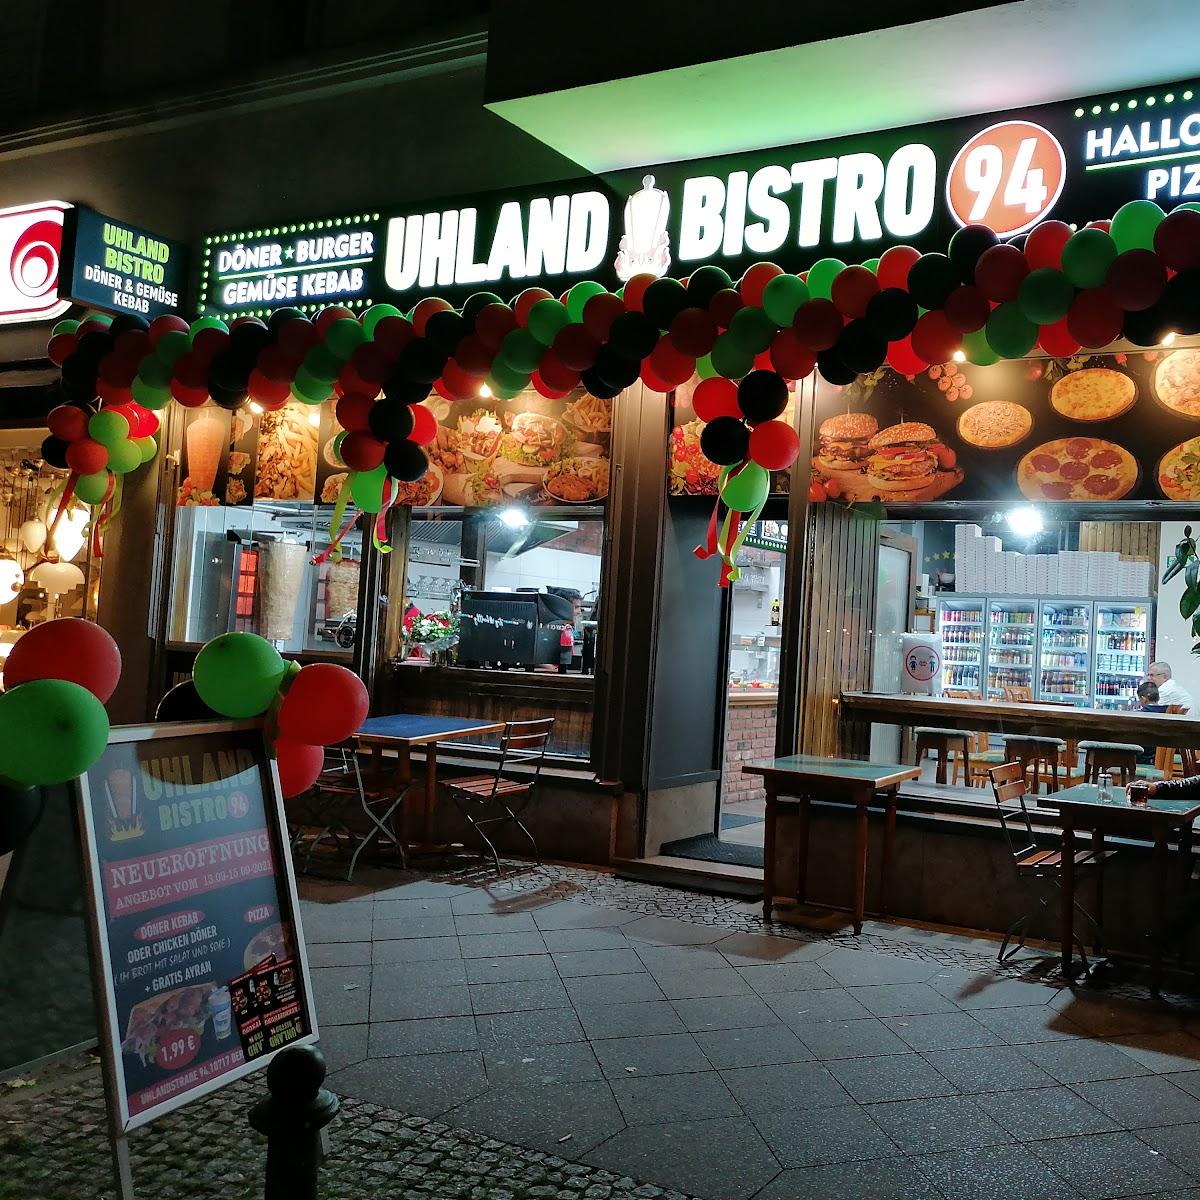 Restaurant "Uhland Bistro" in Berlin